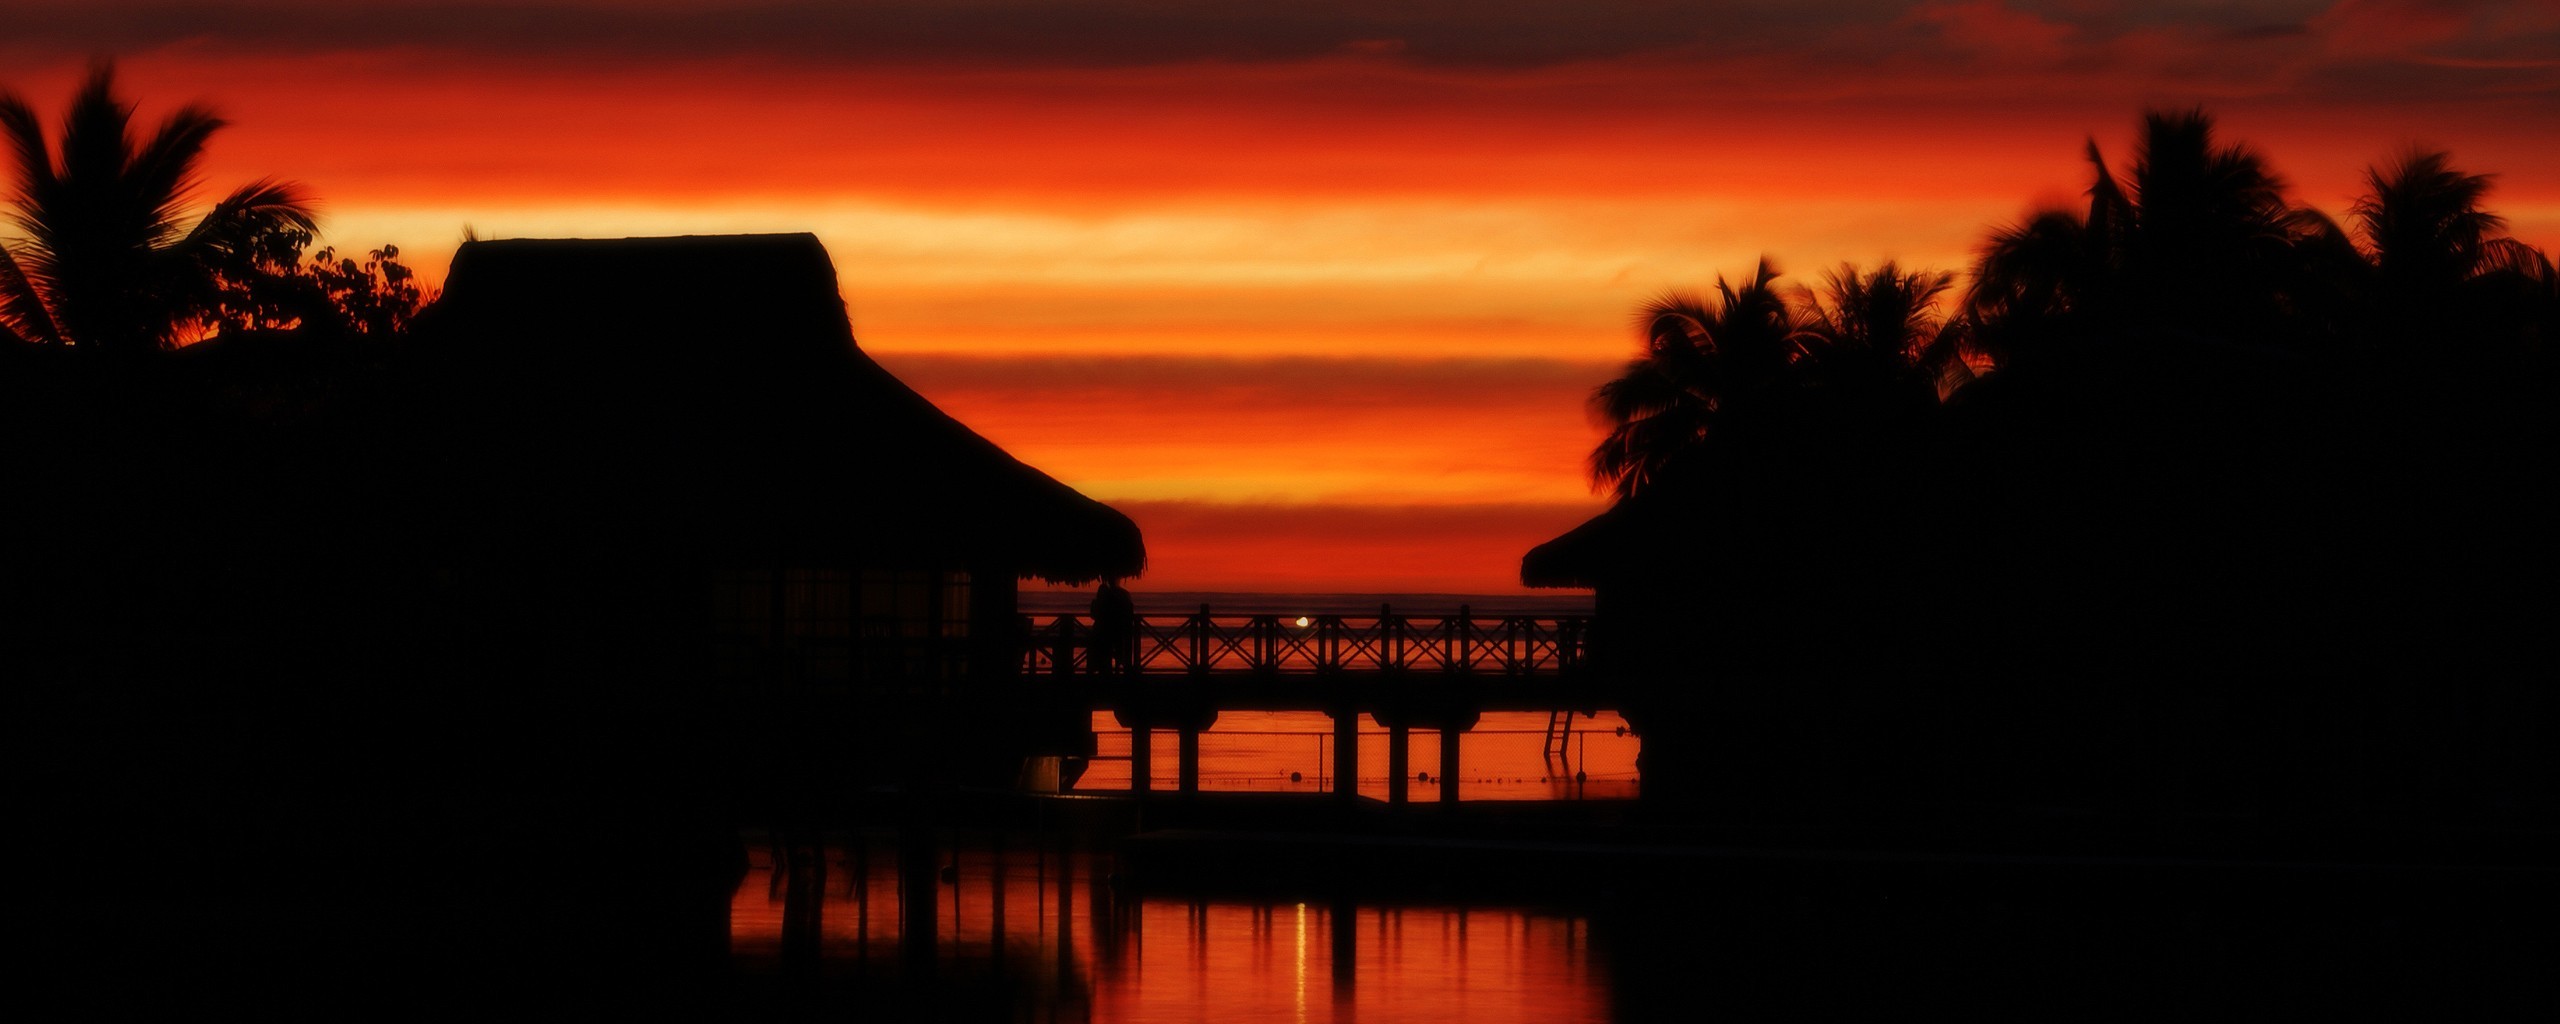 General 2560x1024 sunset silhouette tropical dusk purple sky palm trees resort bungalow orange sky sky sunlight dark outdoors